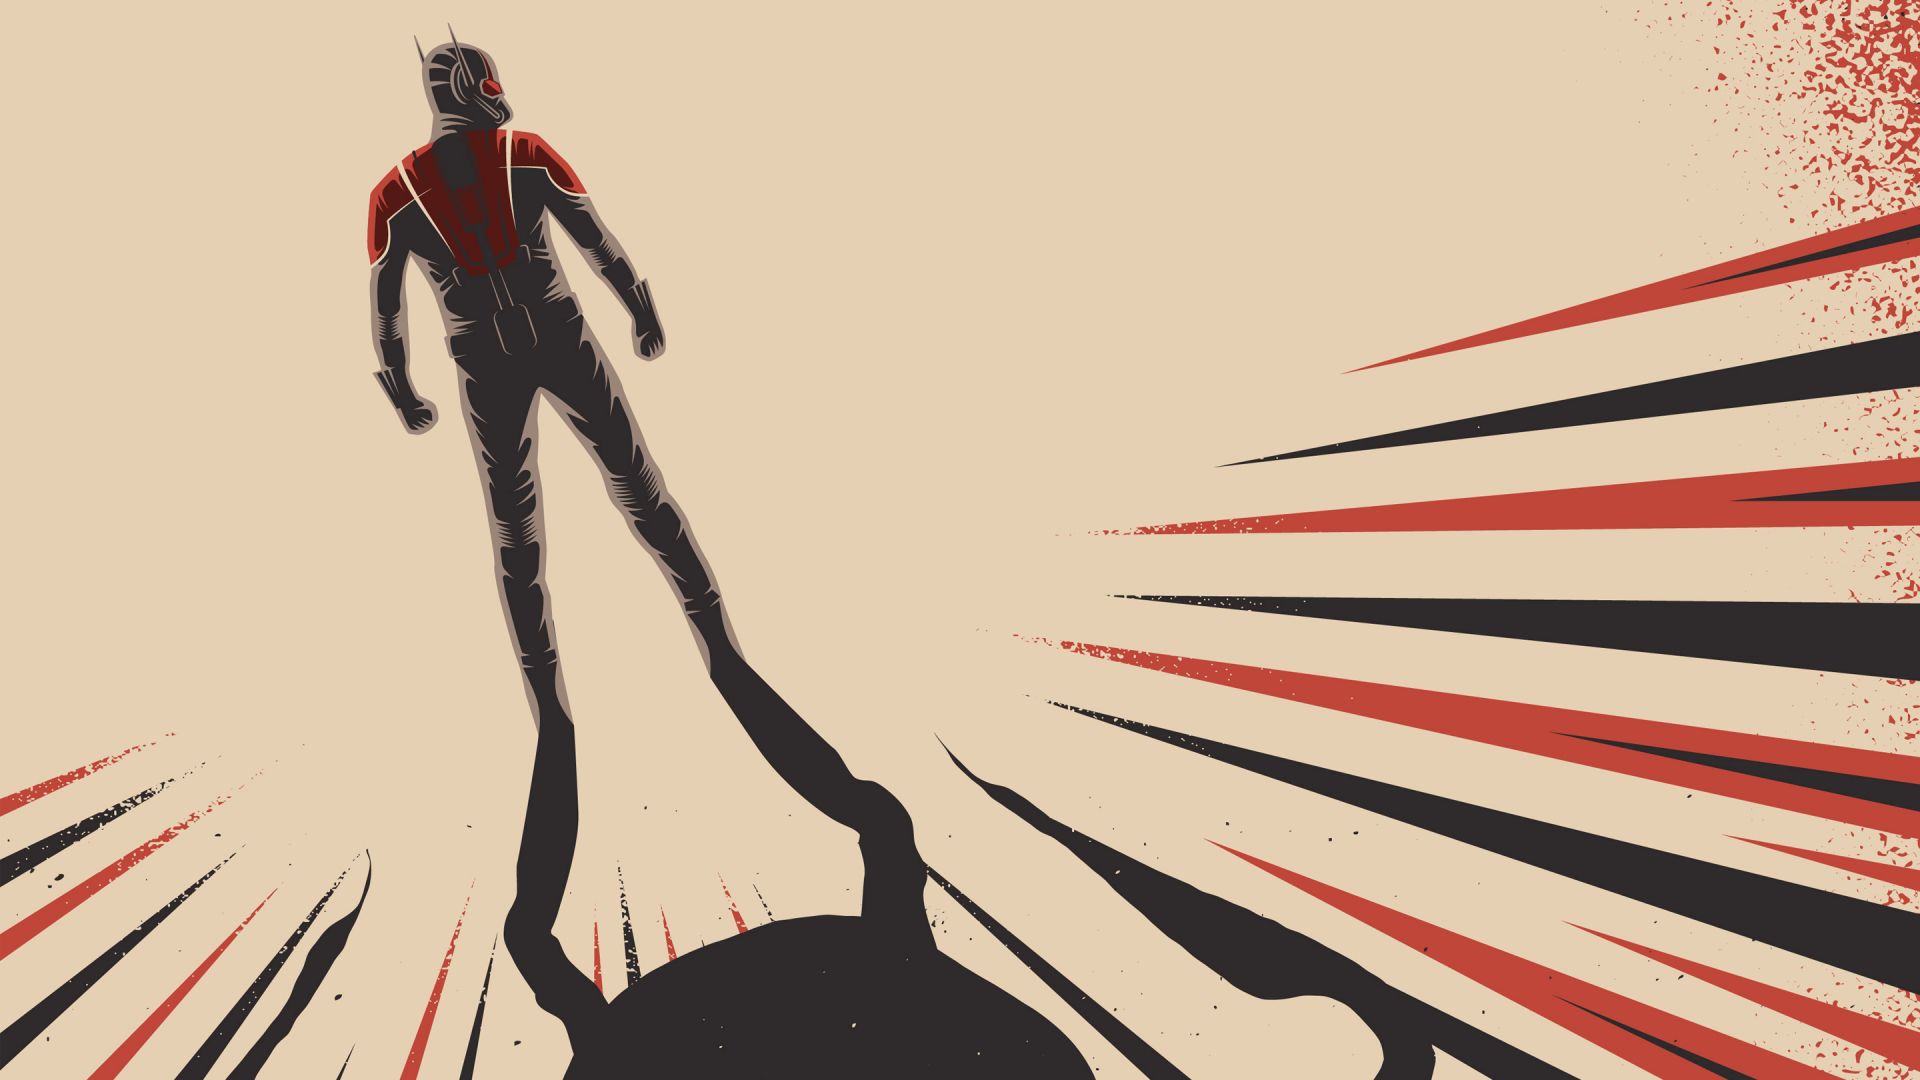 Desktop Wallpaper Ant Man, Marvel Comics, Superhero, Hd Image, Picture,  Background, W4dca